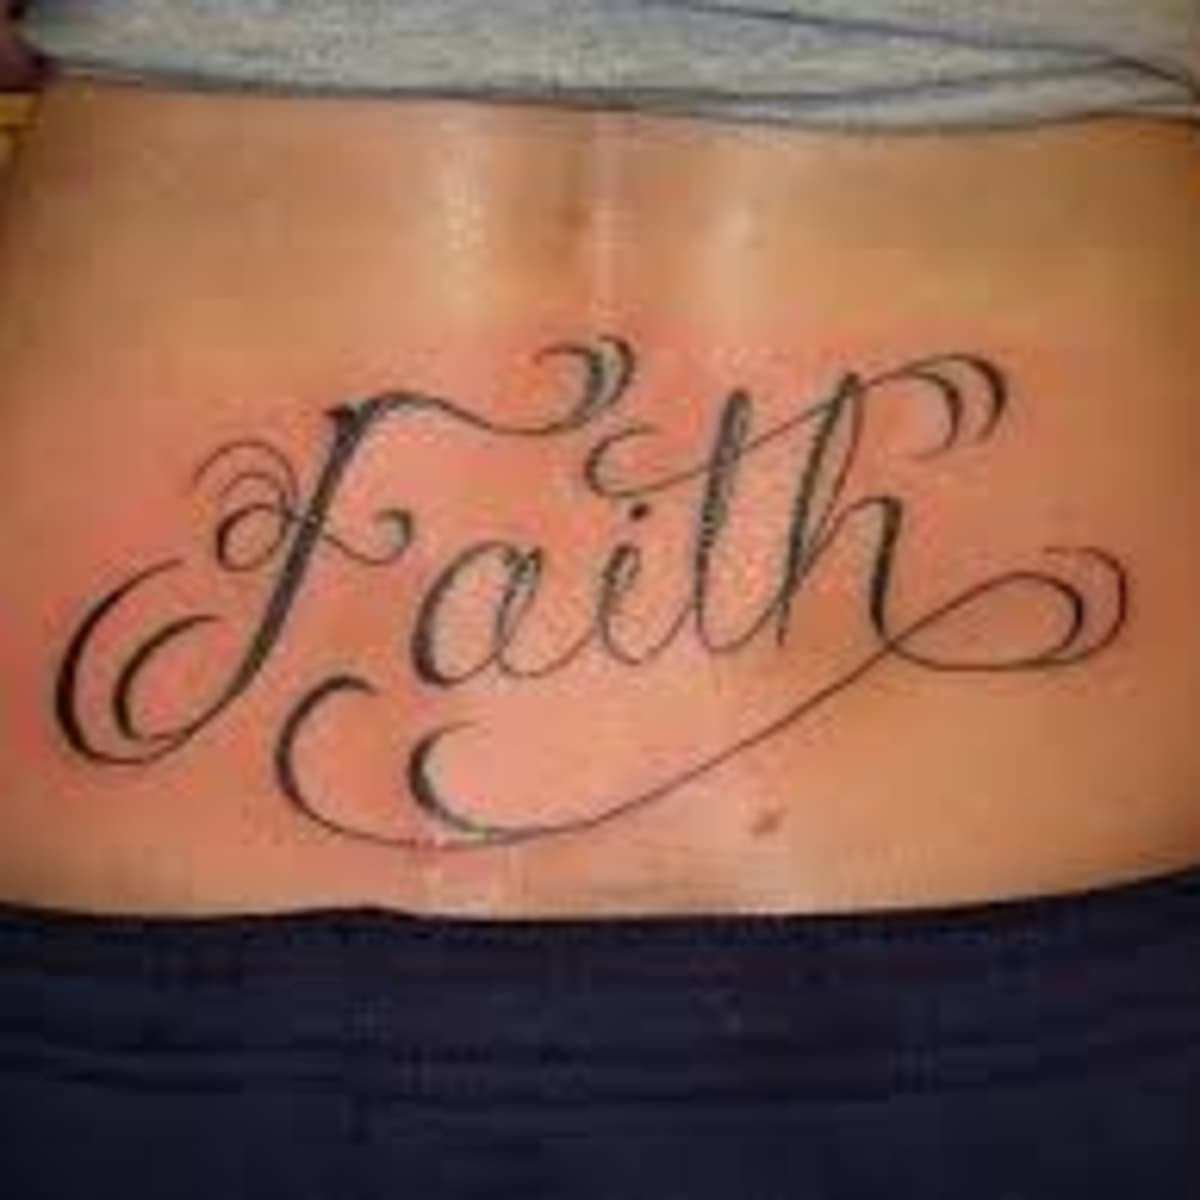 trust and believe tattoo design